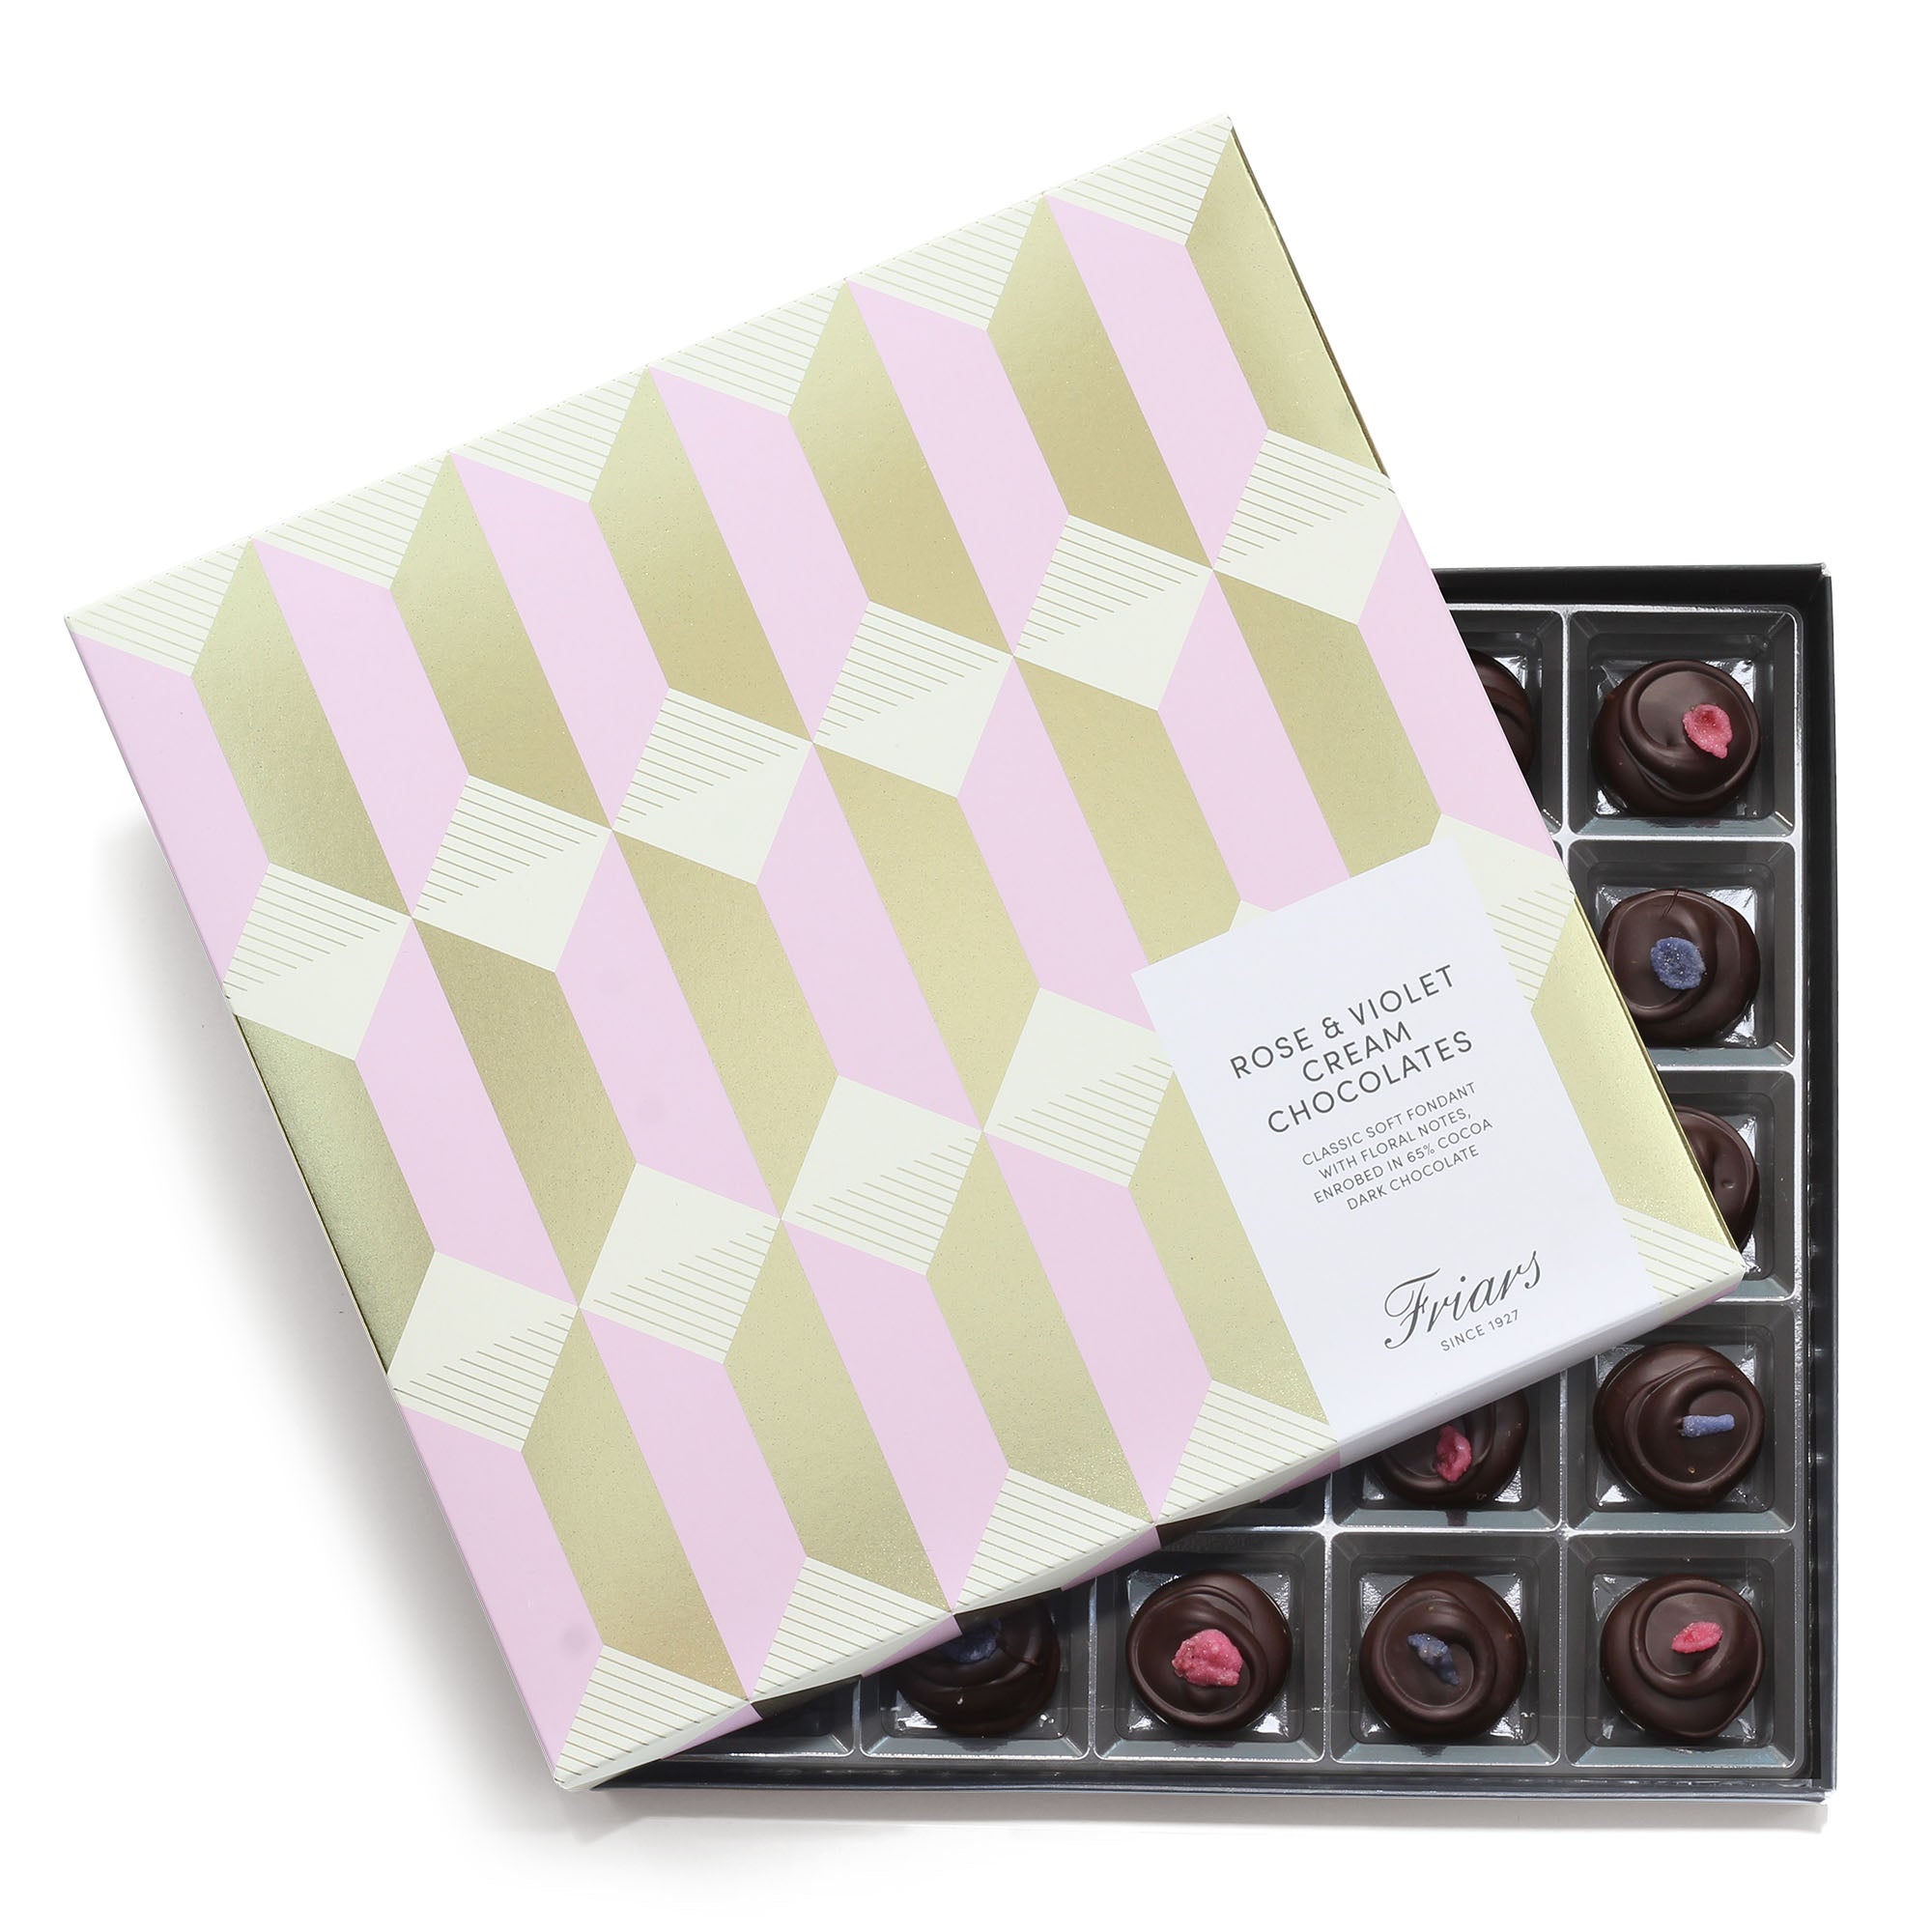 Rose & Violet Creams Chocolate Gift Box